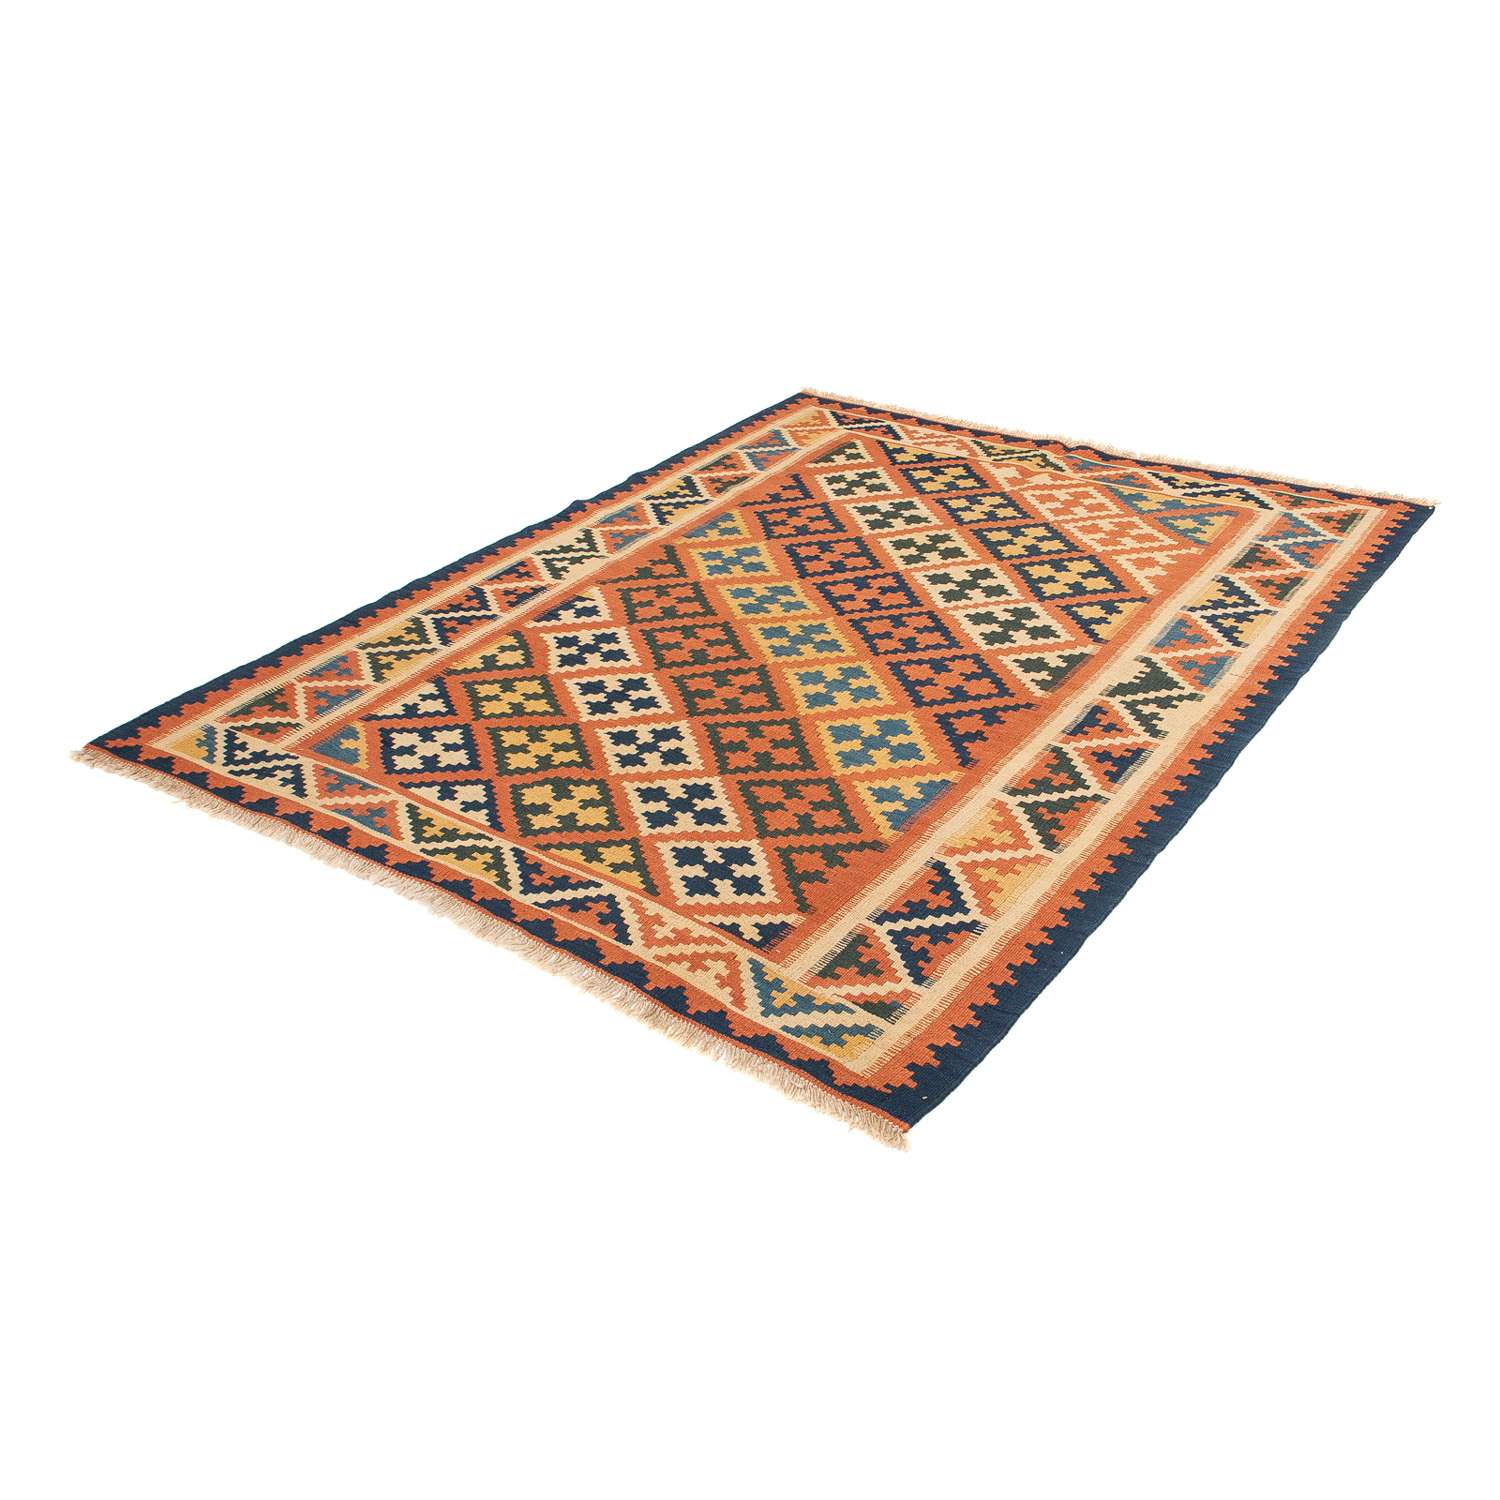 Kelim Carpet - orientalisk matta - 200 x 157 cm - brun